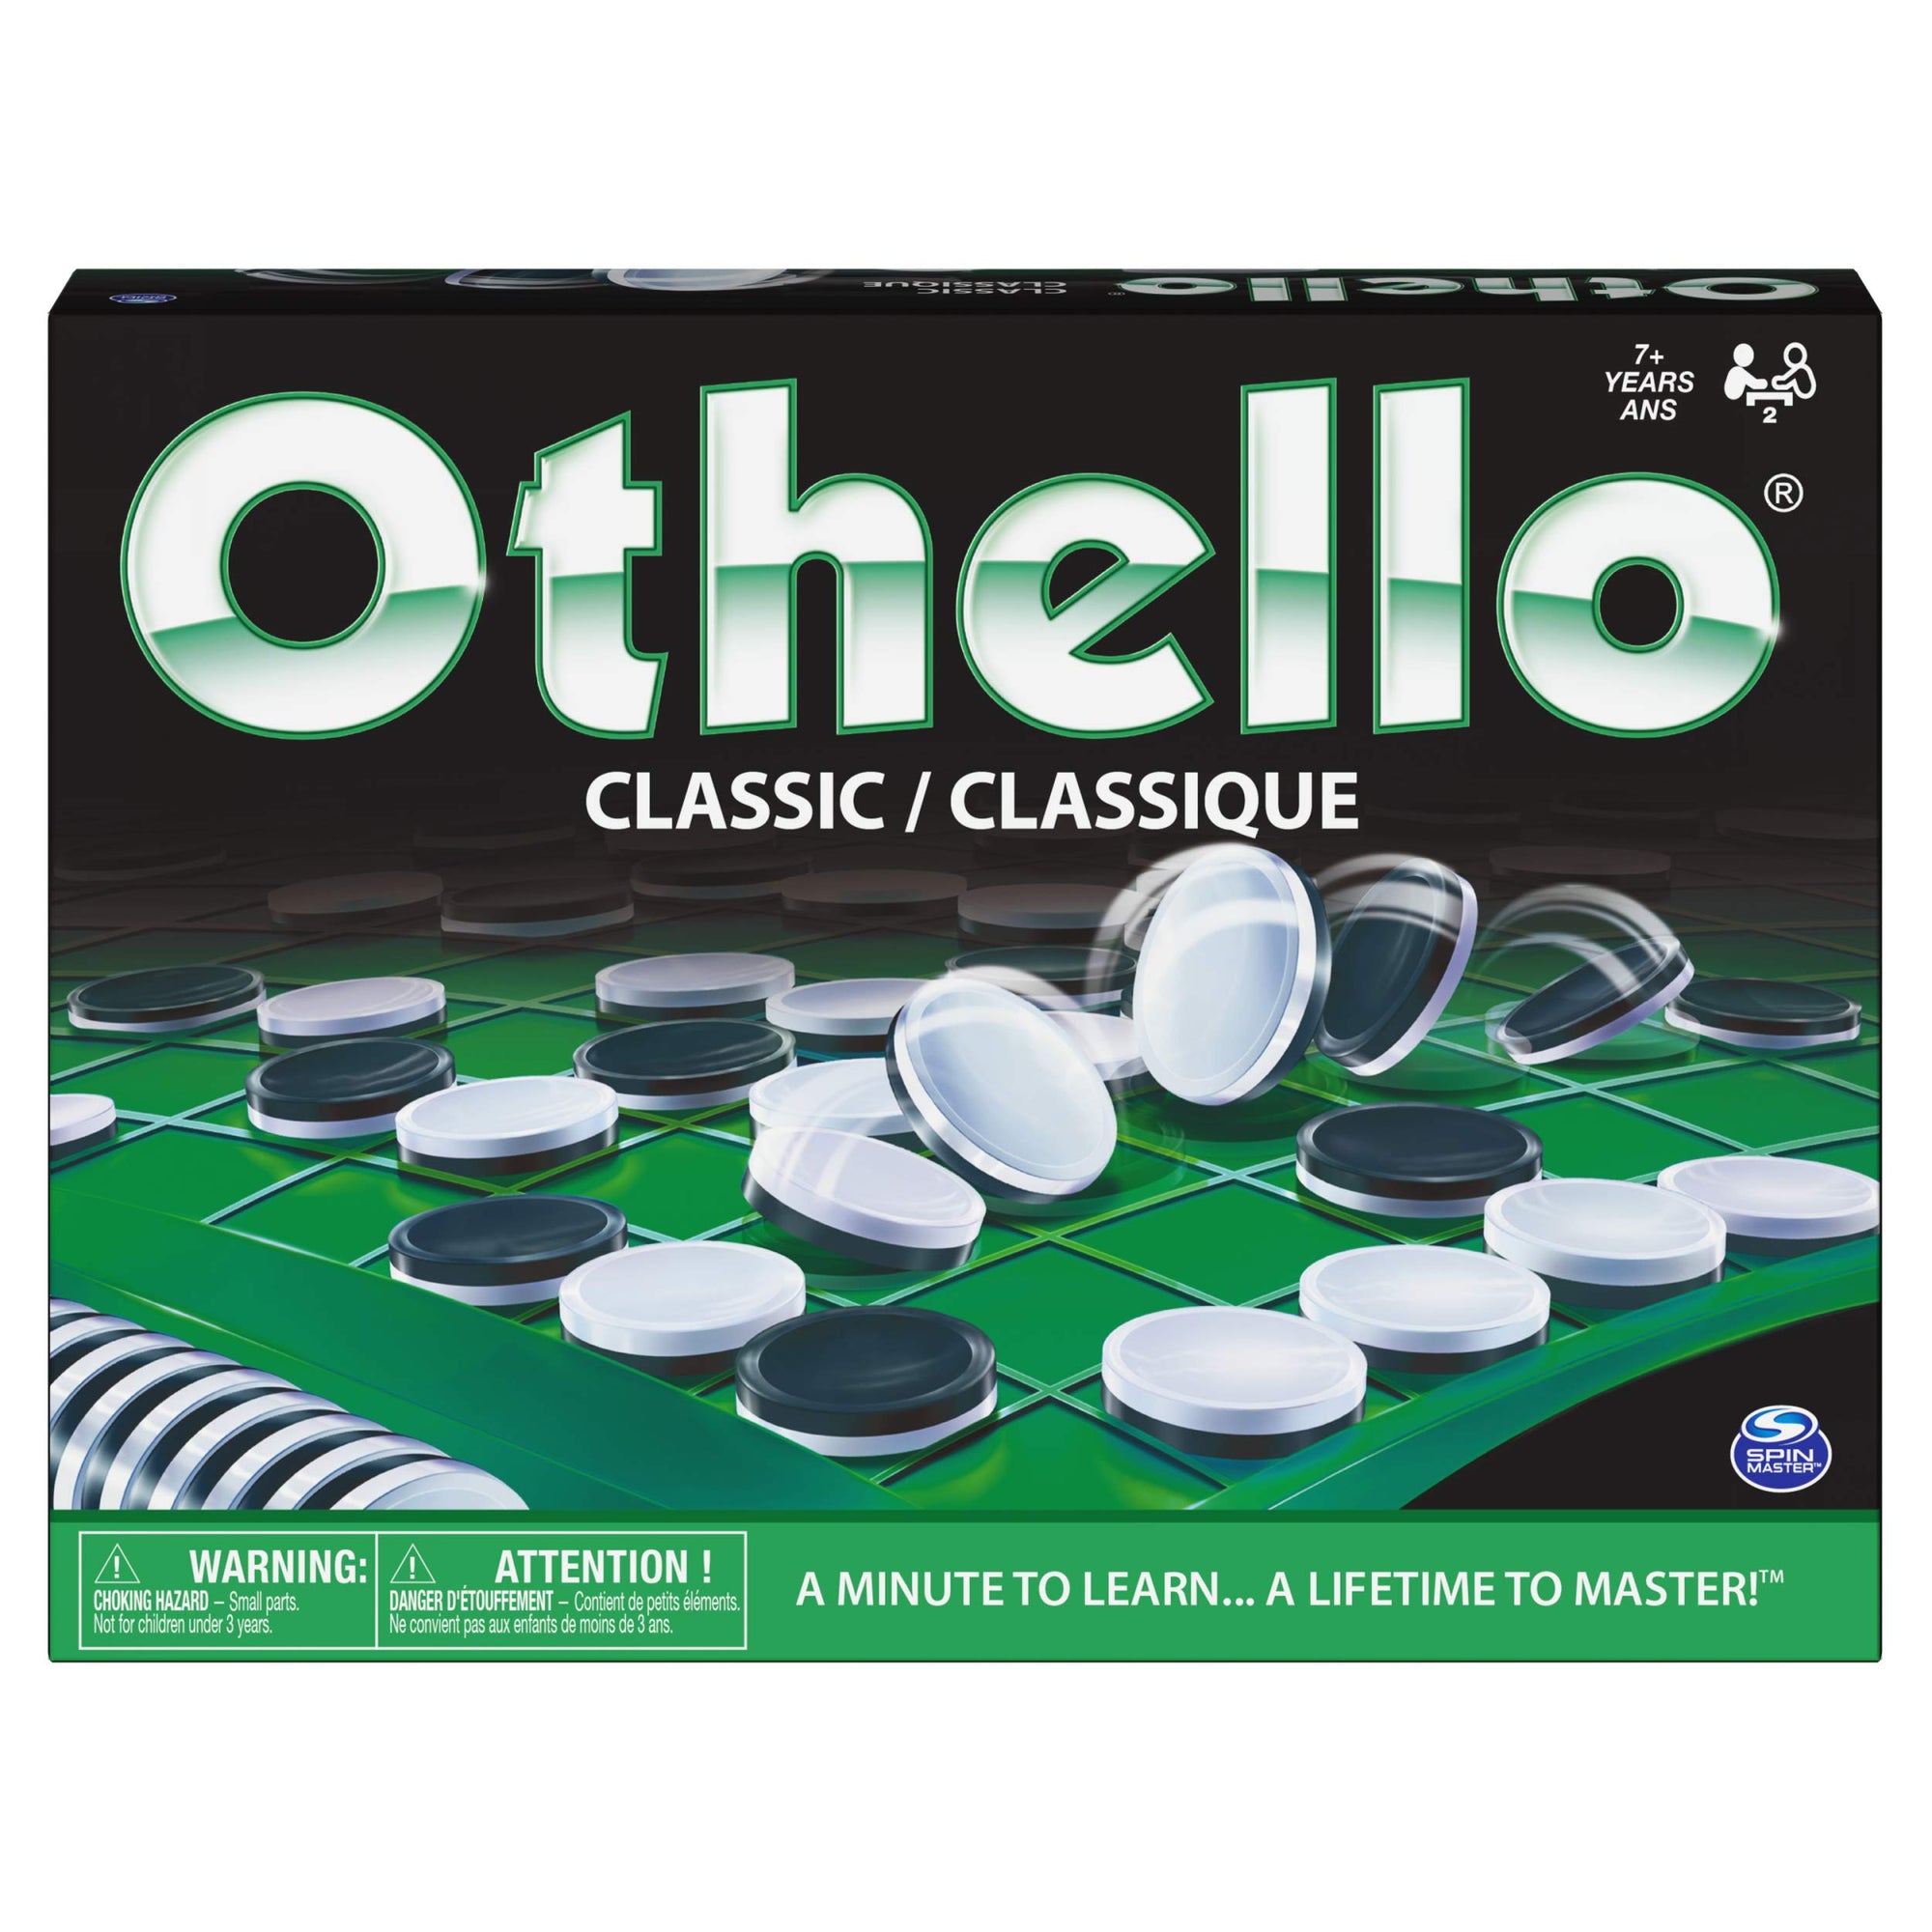 Othello Classic Game